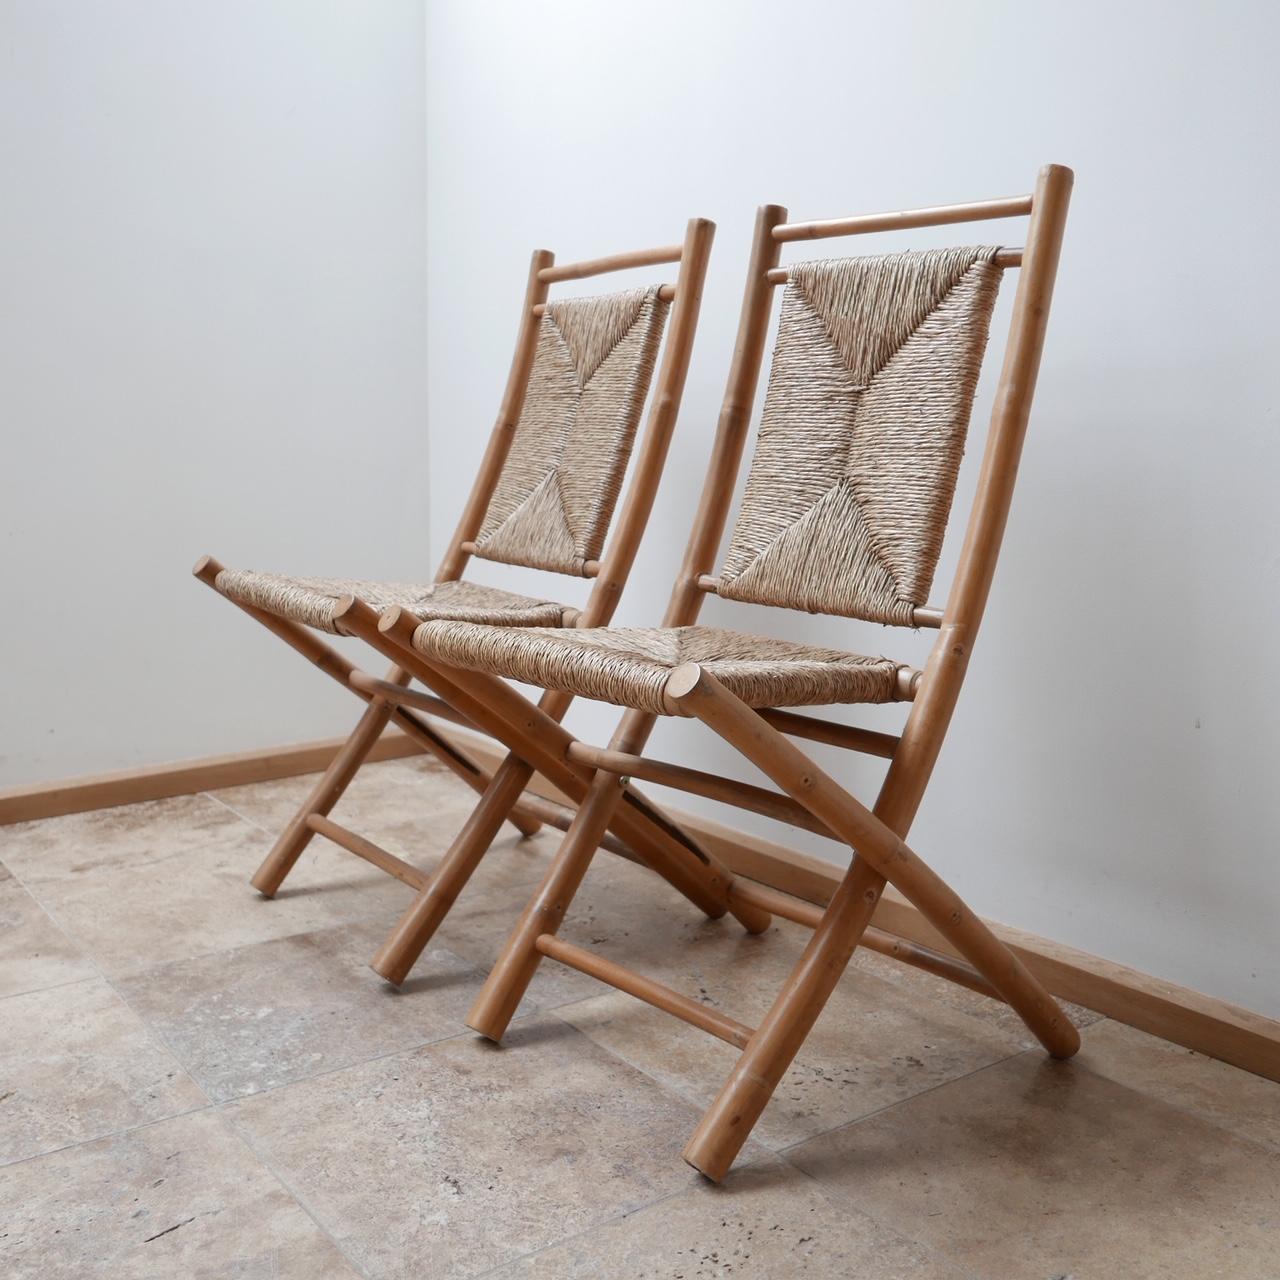 British Pair of Midcentury Bamboo and Rush Foldable Chairs